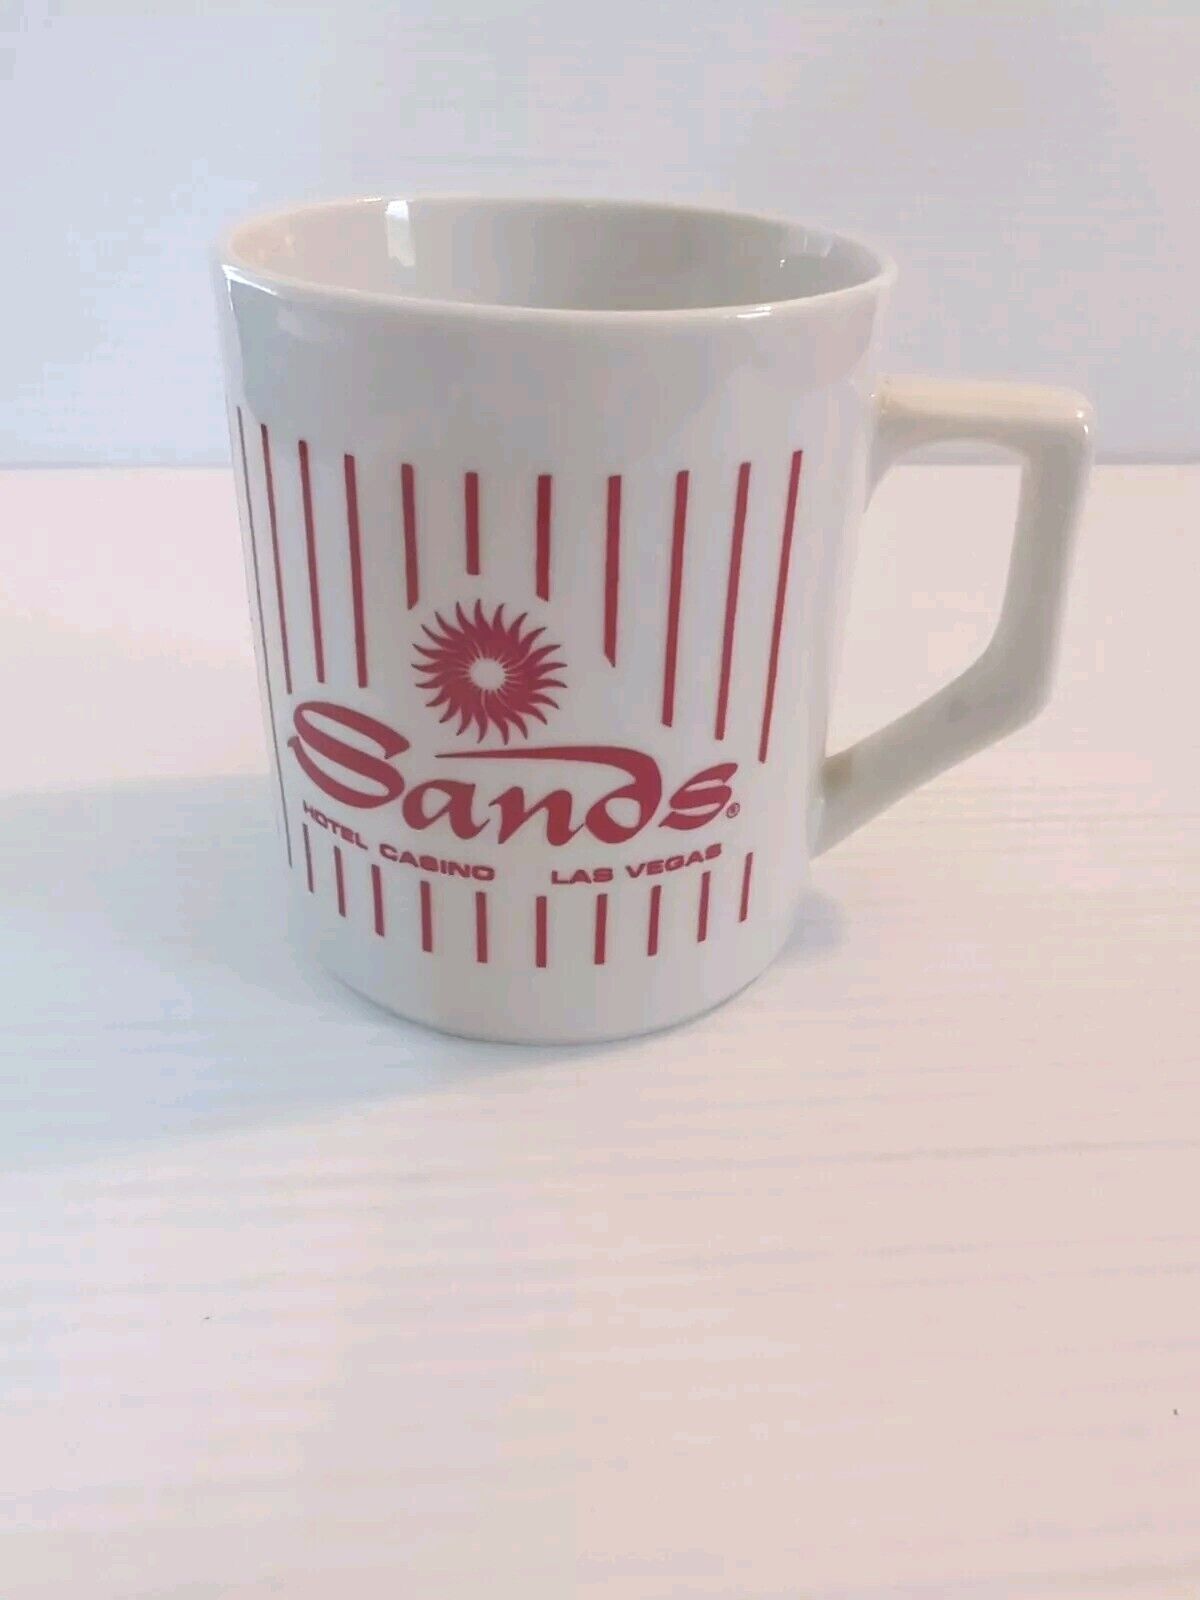 Vintage Sands Hotel Casino Coffee Mug Ceramic